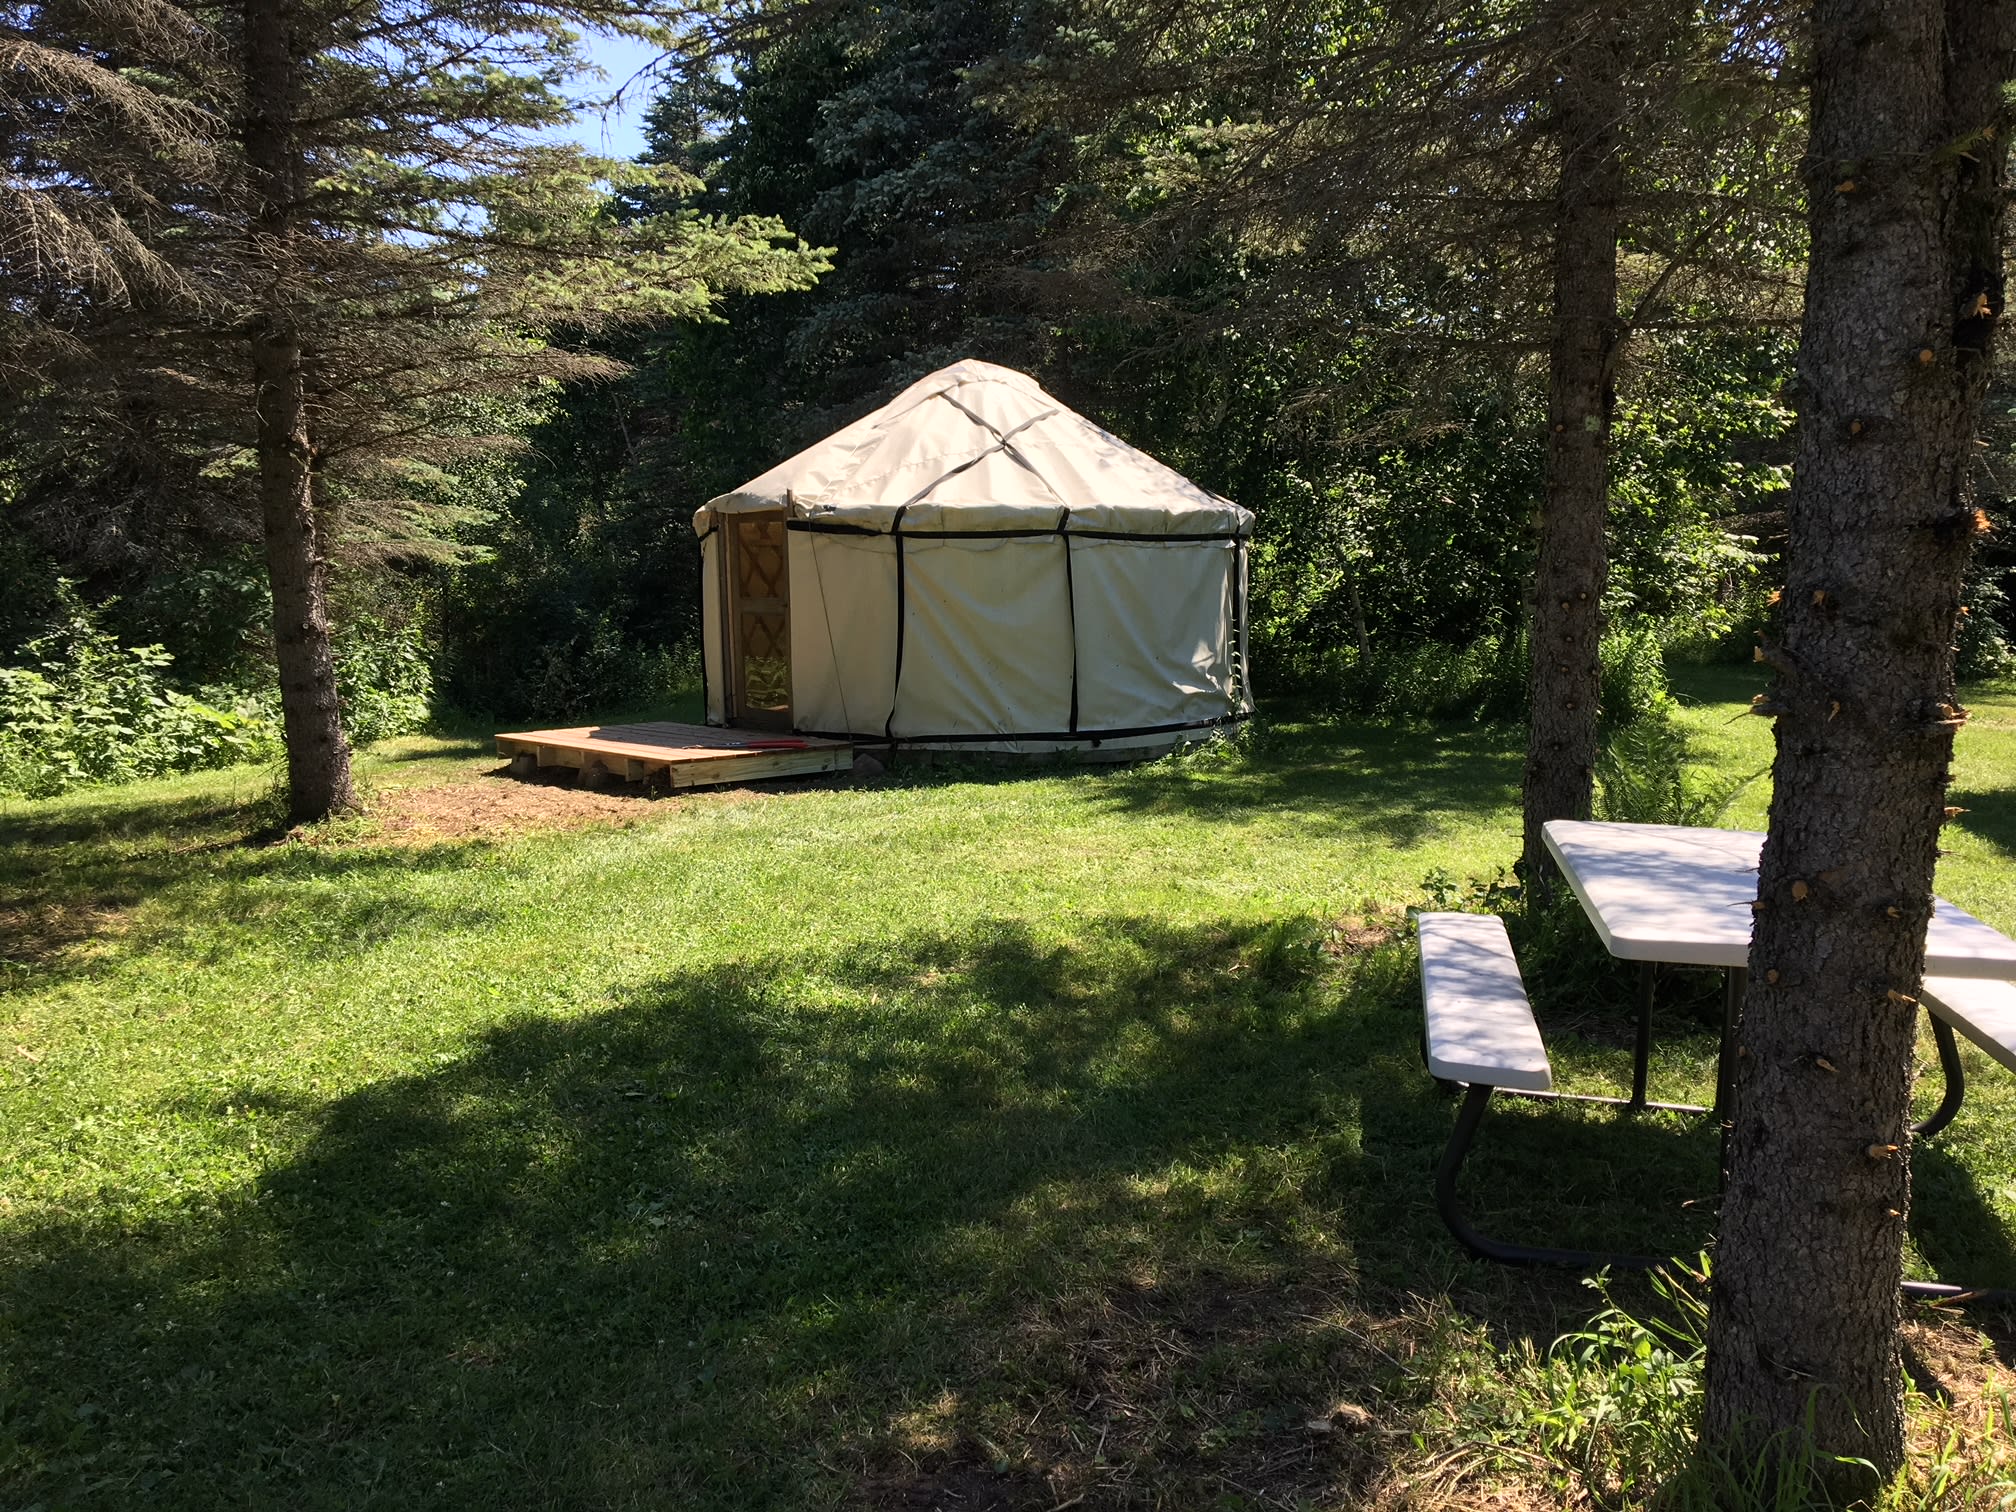 Yurt in the Pines